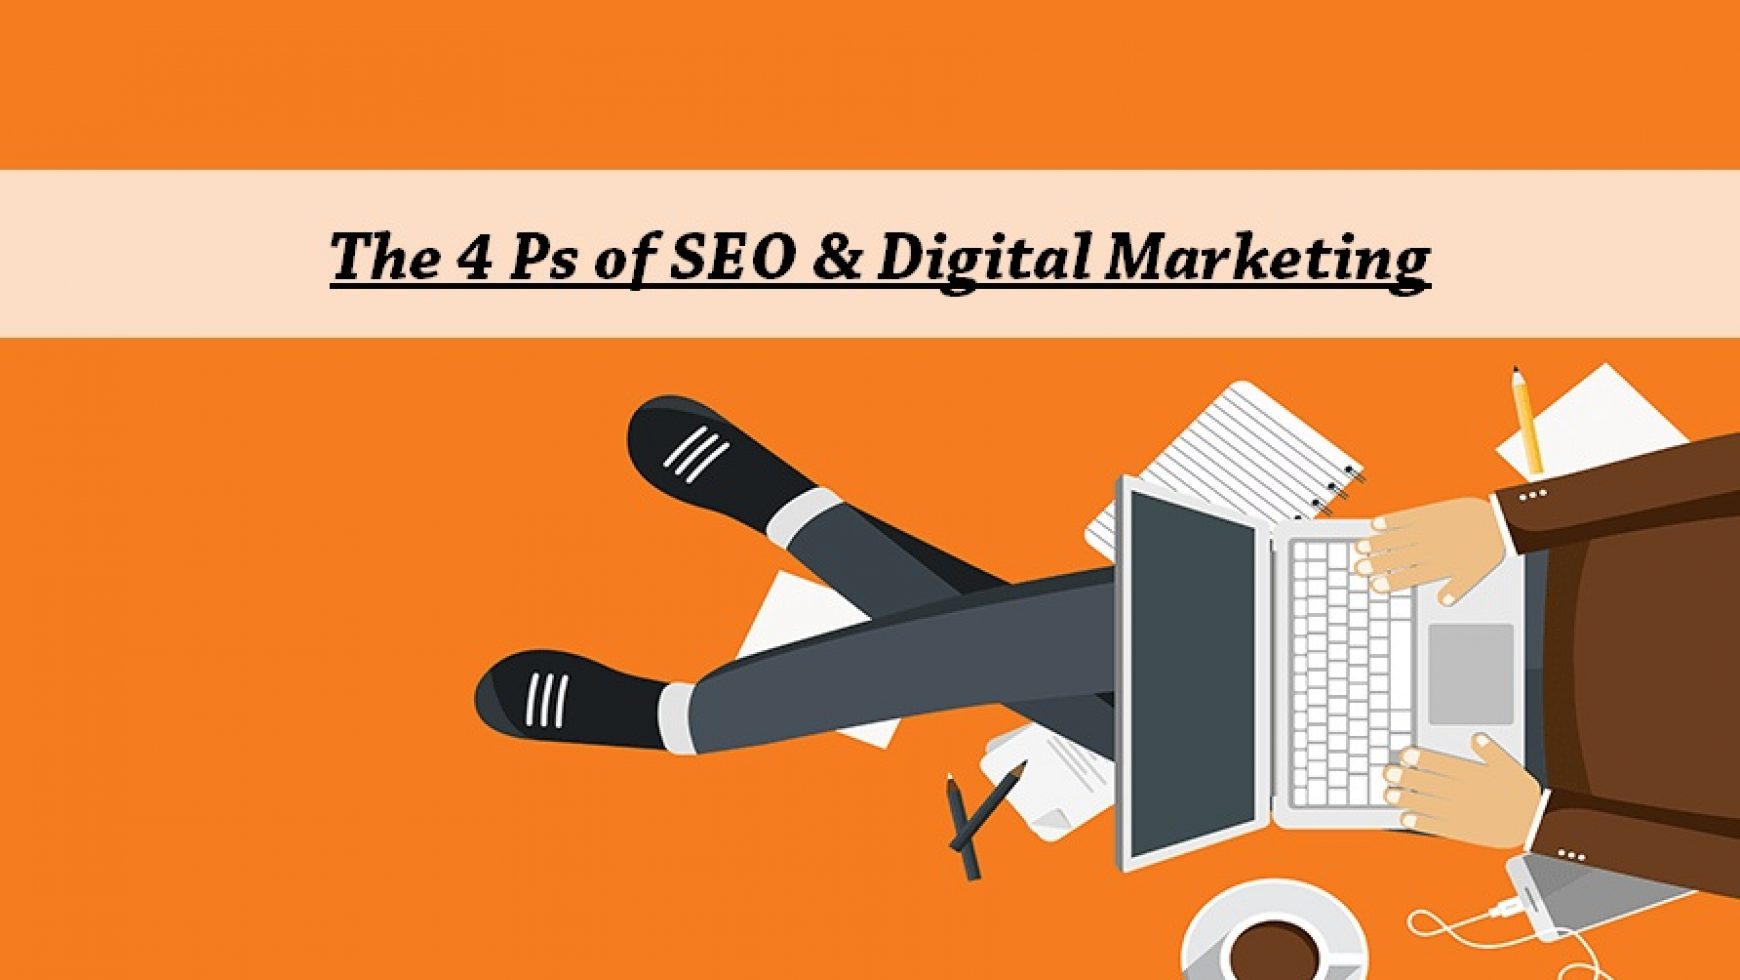 The 4 Ps of SEO & Digital Marketing